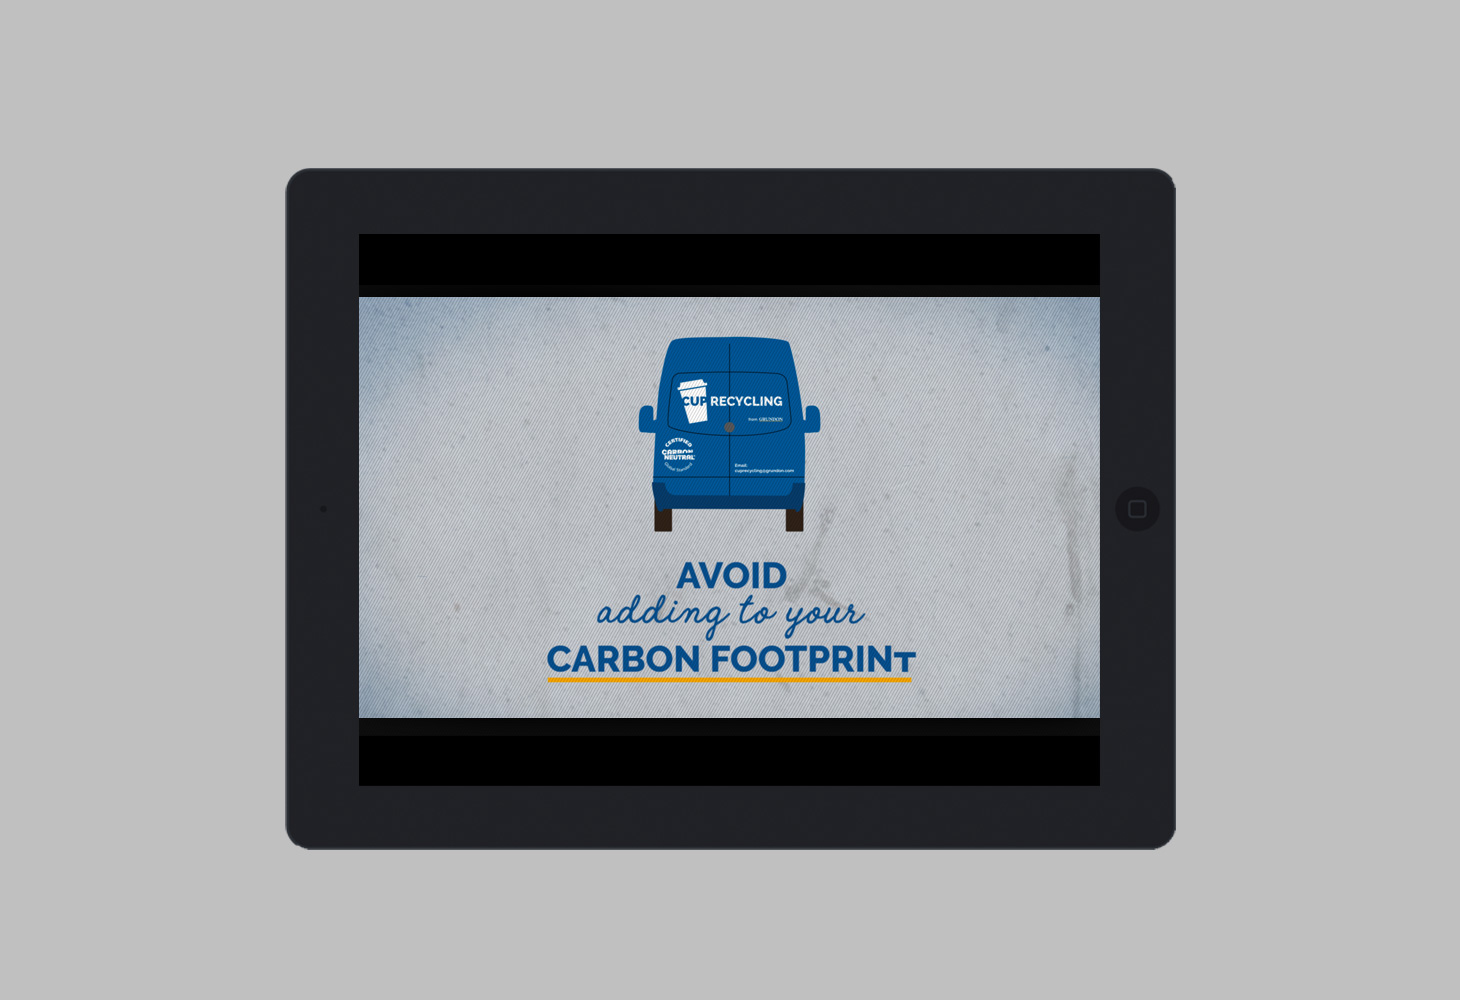 Grundon - Recycling Cups - Carbon footprint